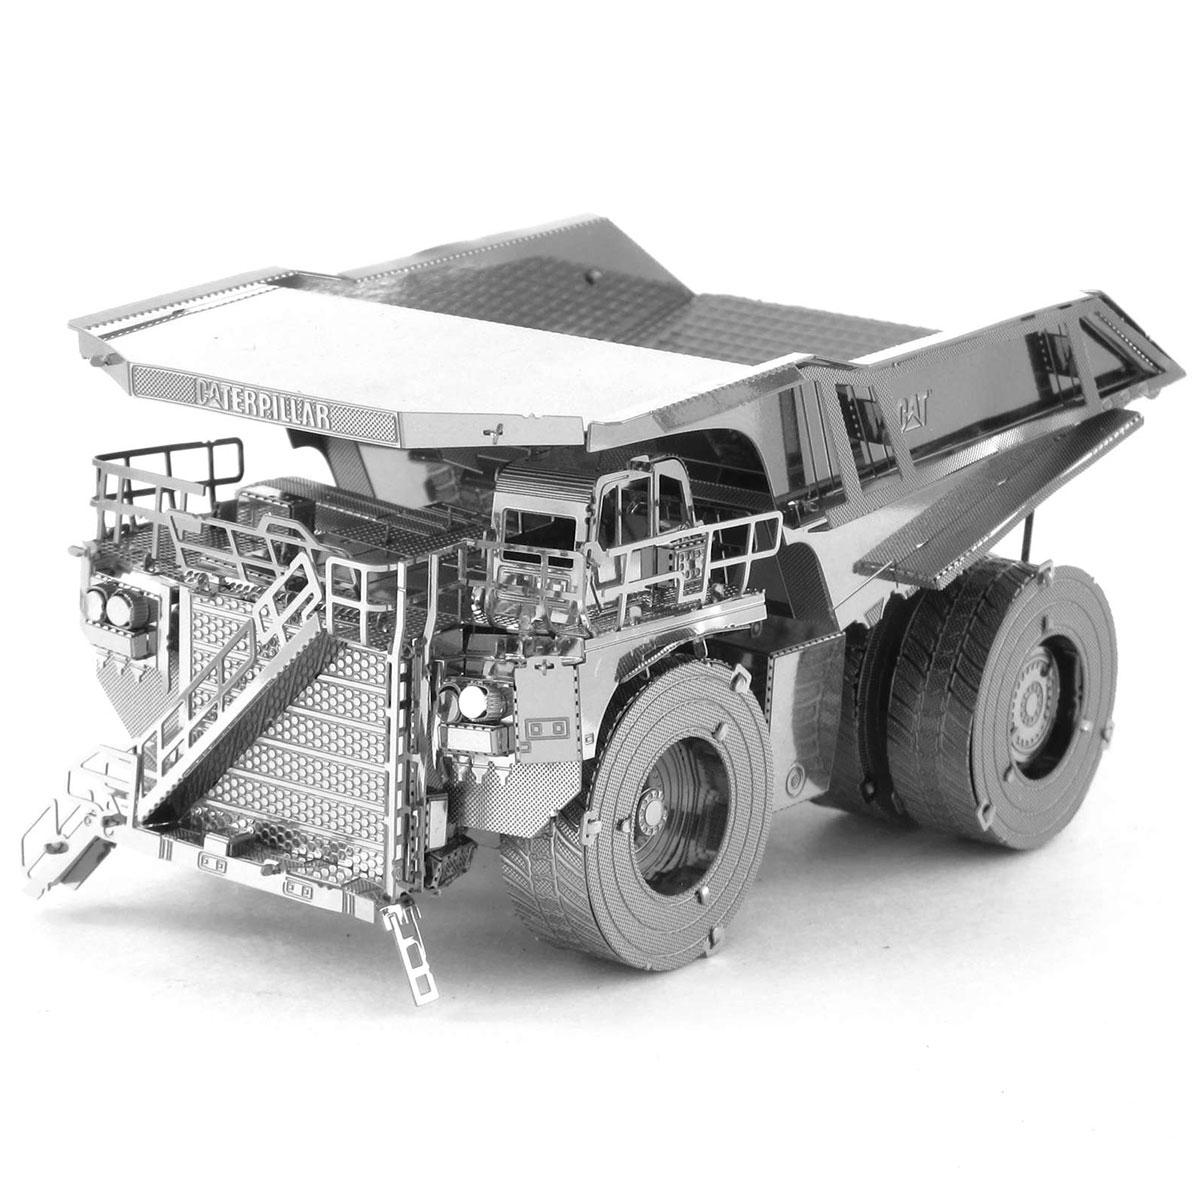 Metal Earth Mining Truck